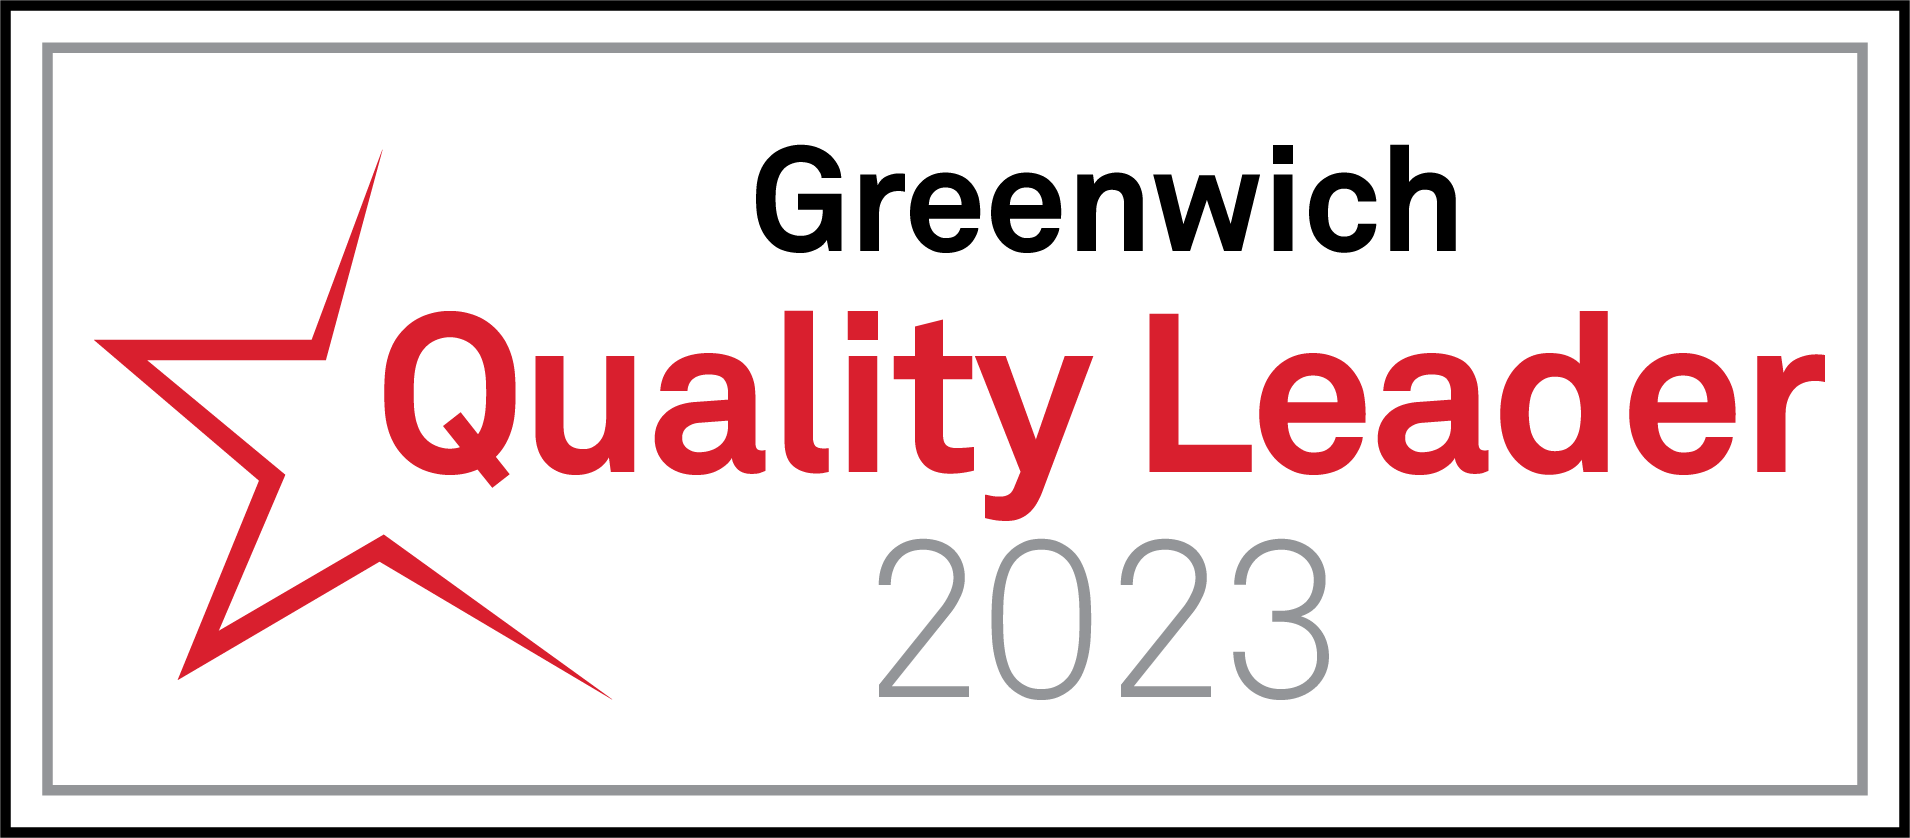 Greenwich Quality Leader 2022